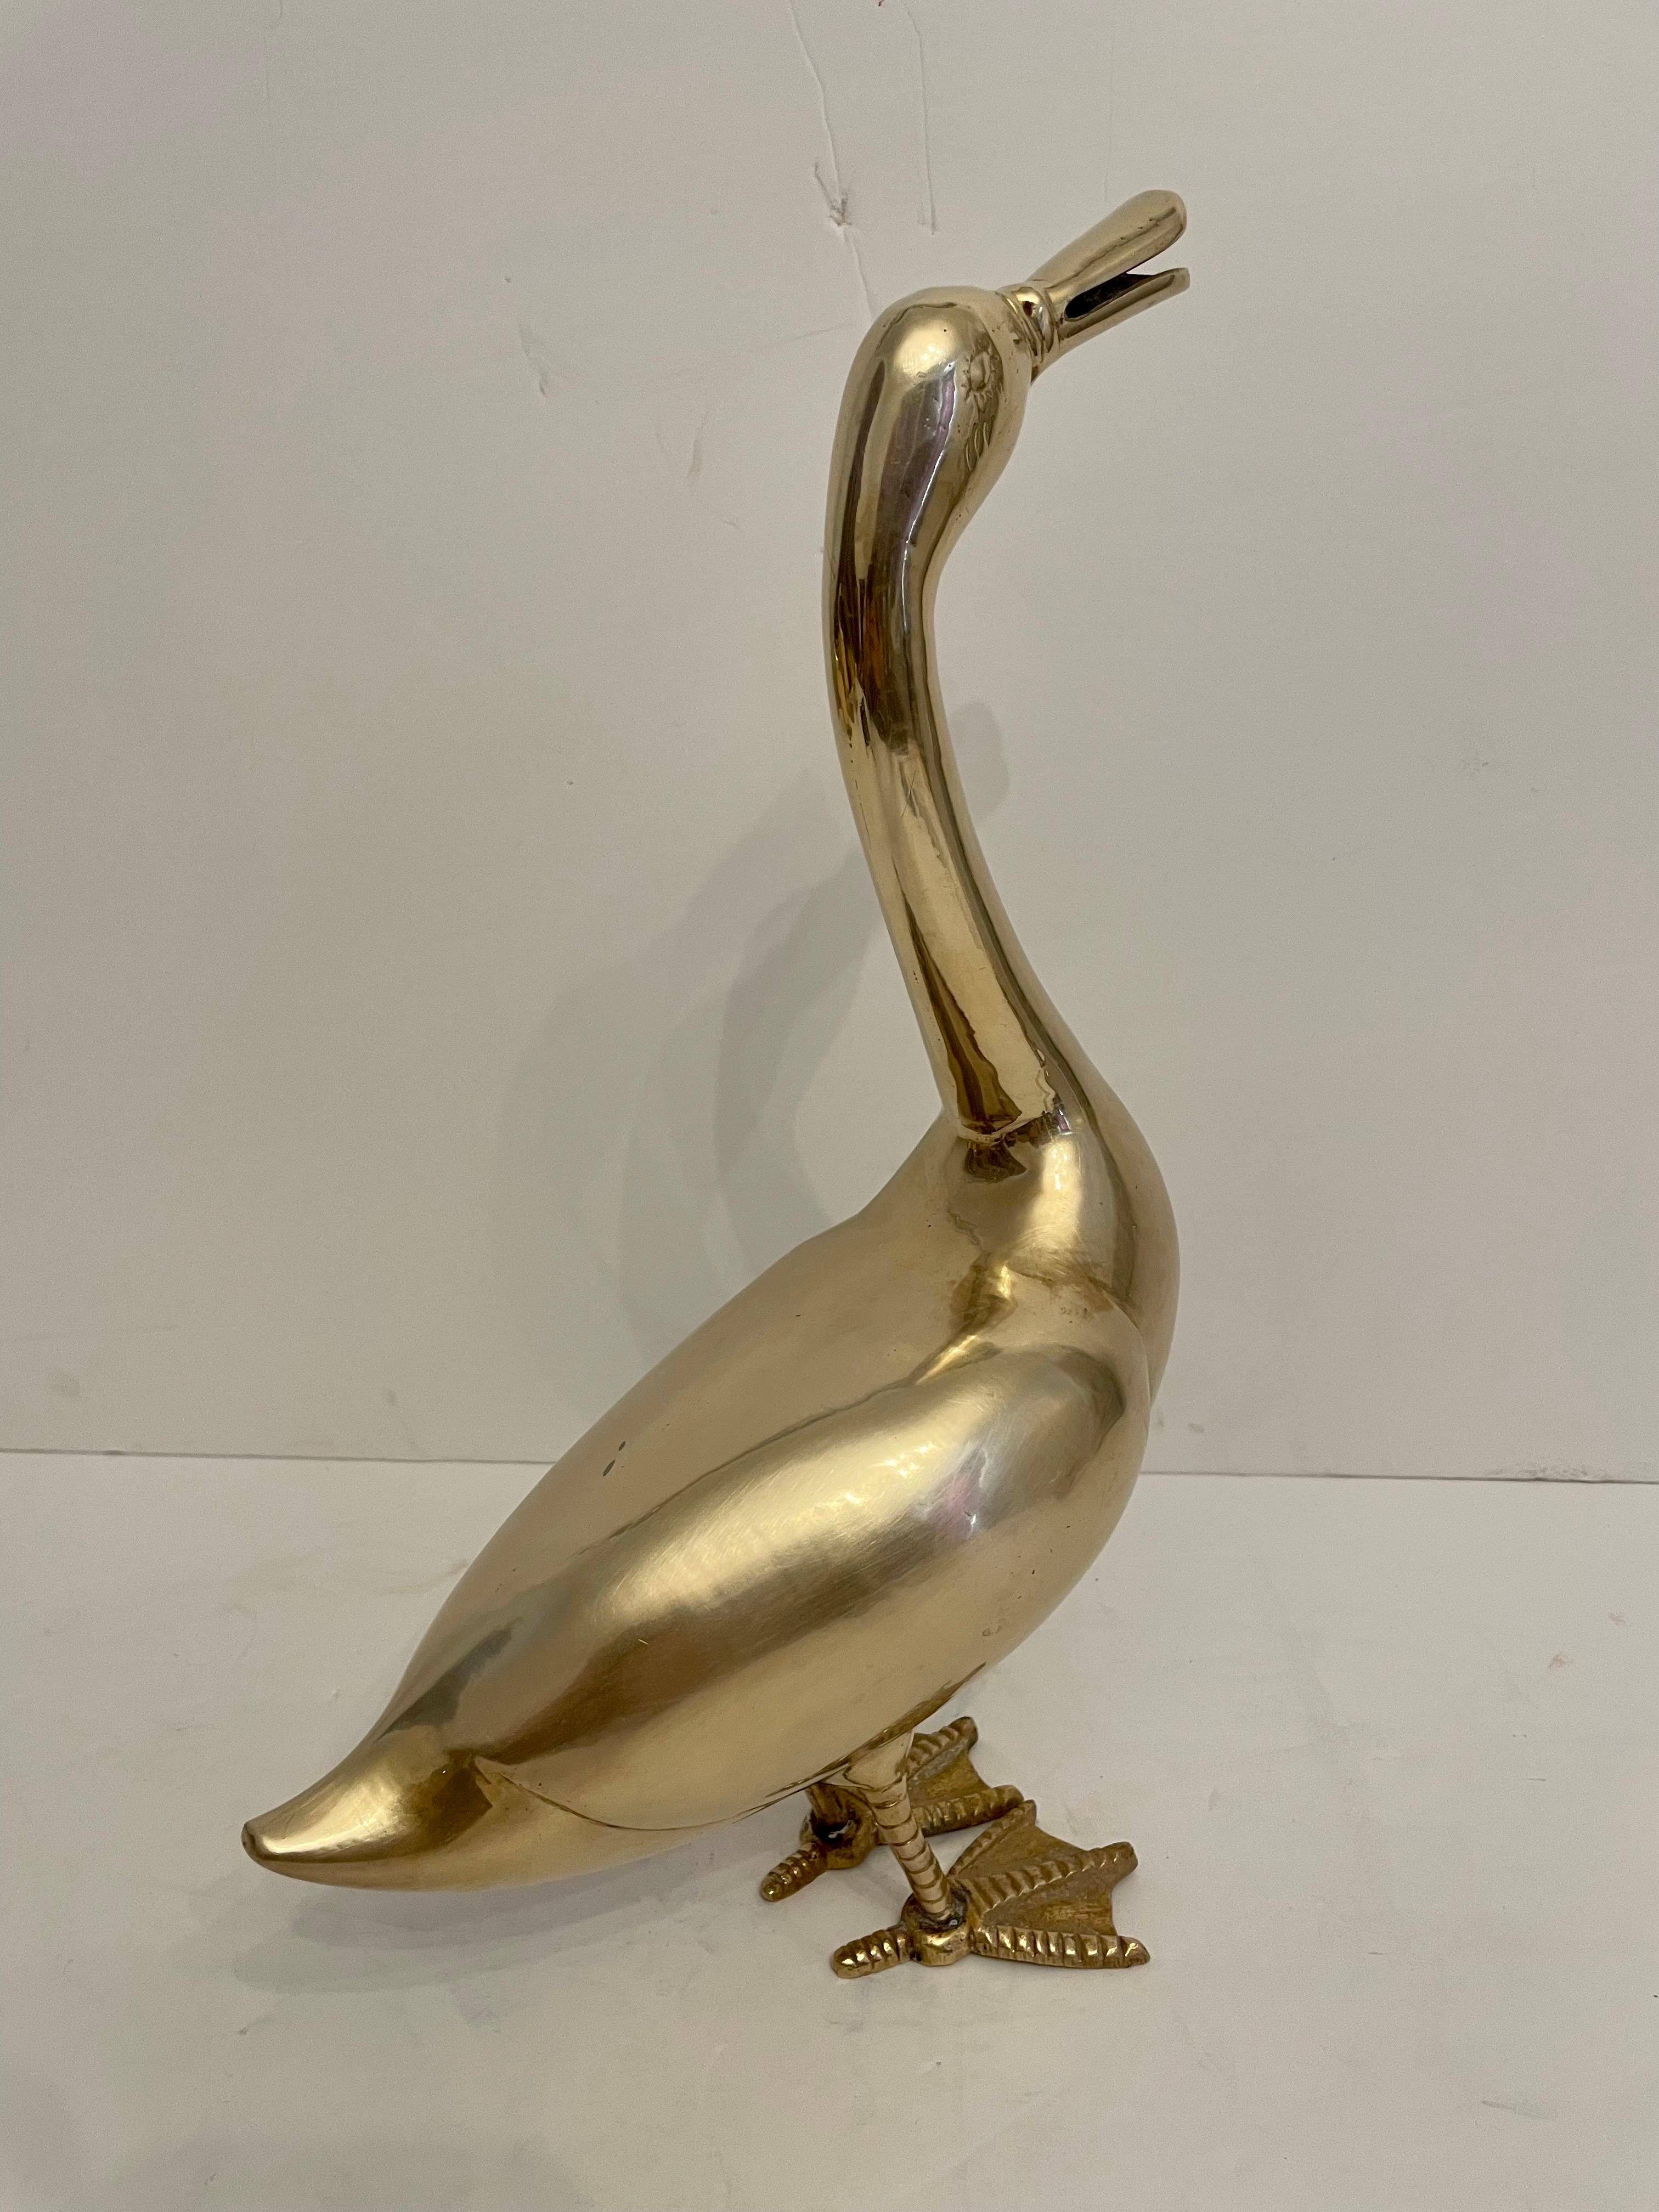 Vintage large brass duck. Measures 10